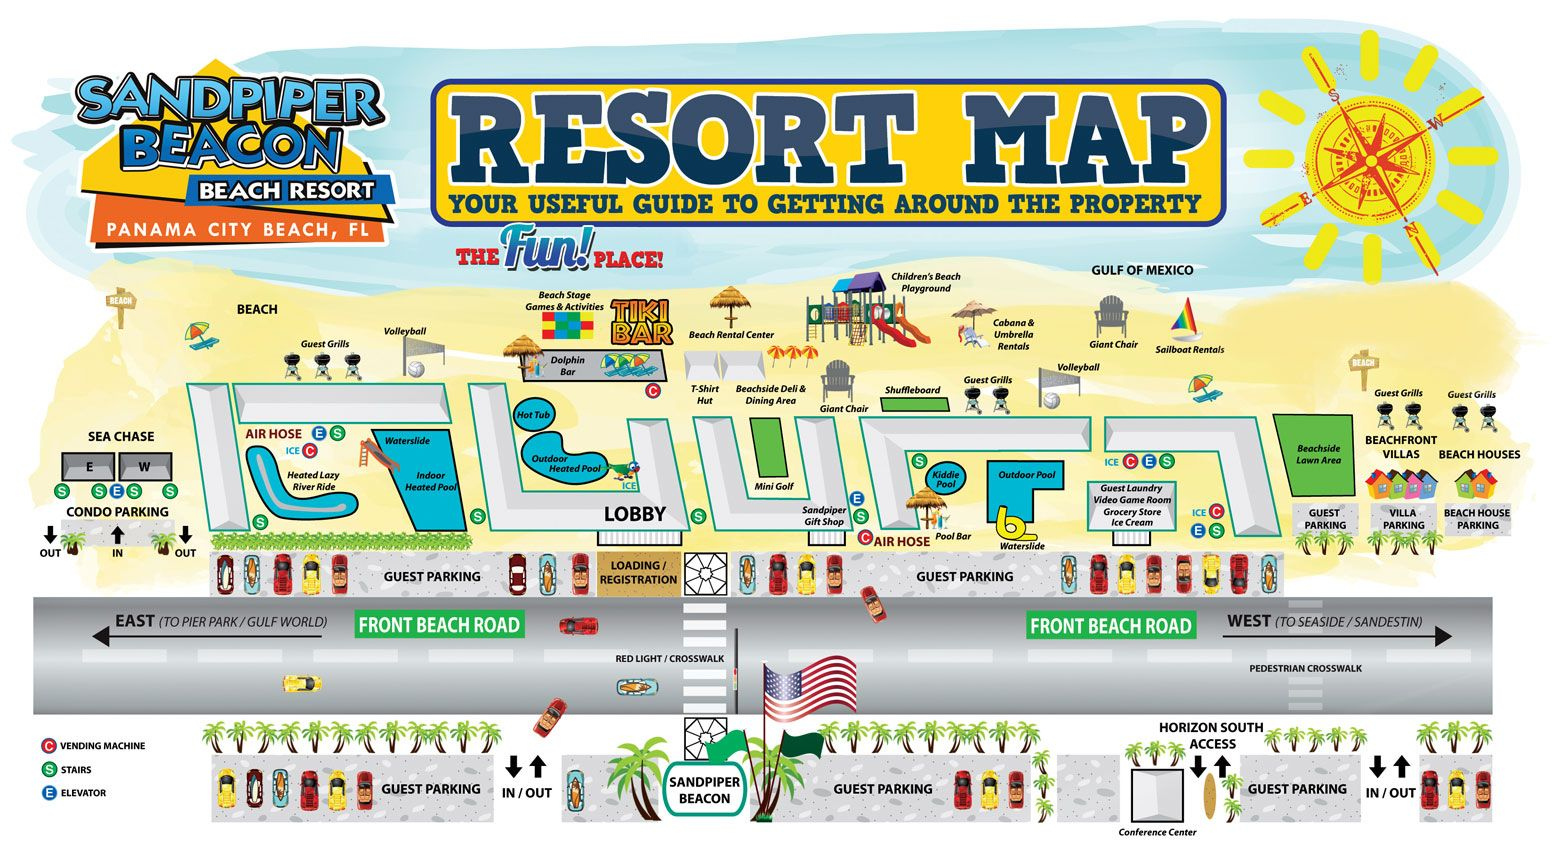 The Resort Map Of The Sandpiper Beacon Beach Resort In Panama City 